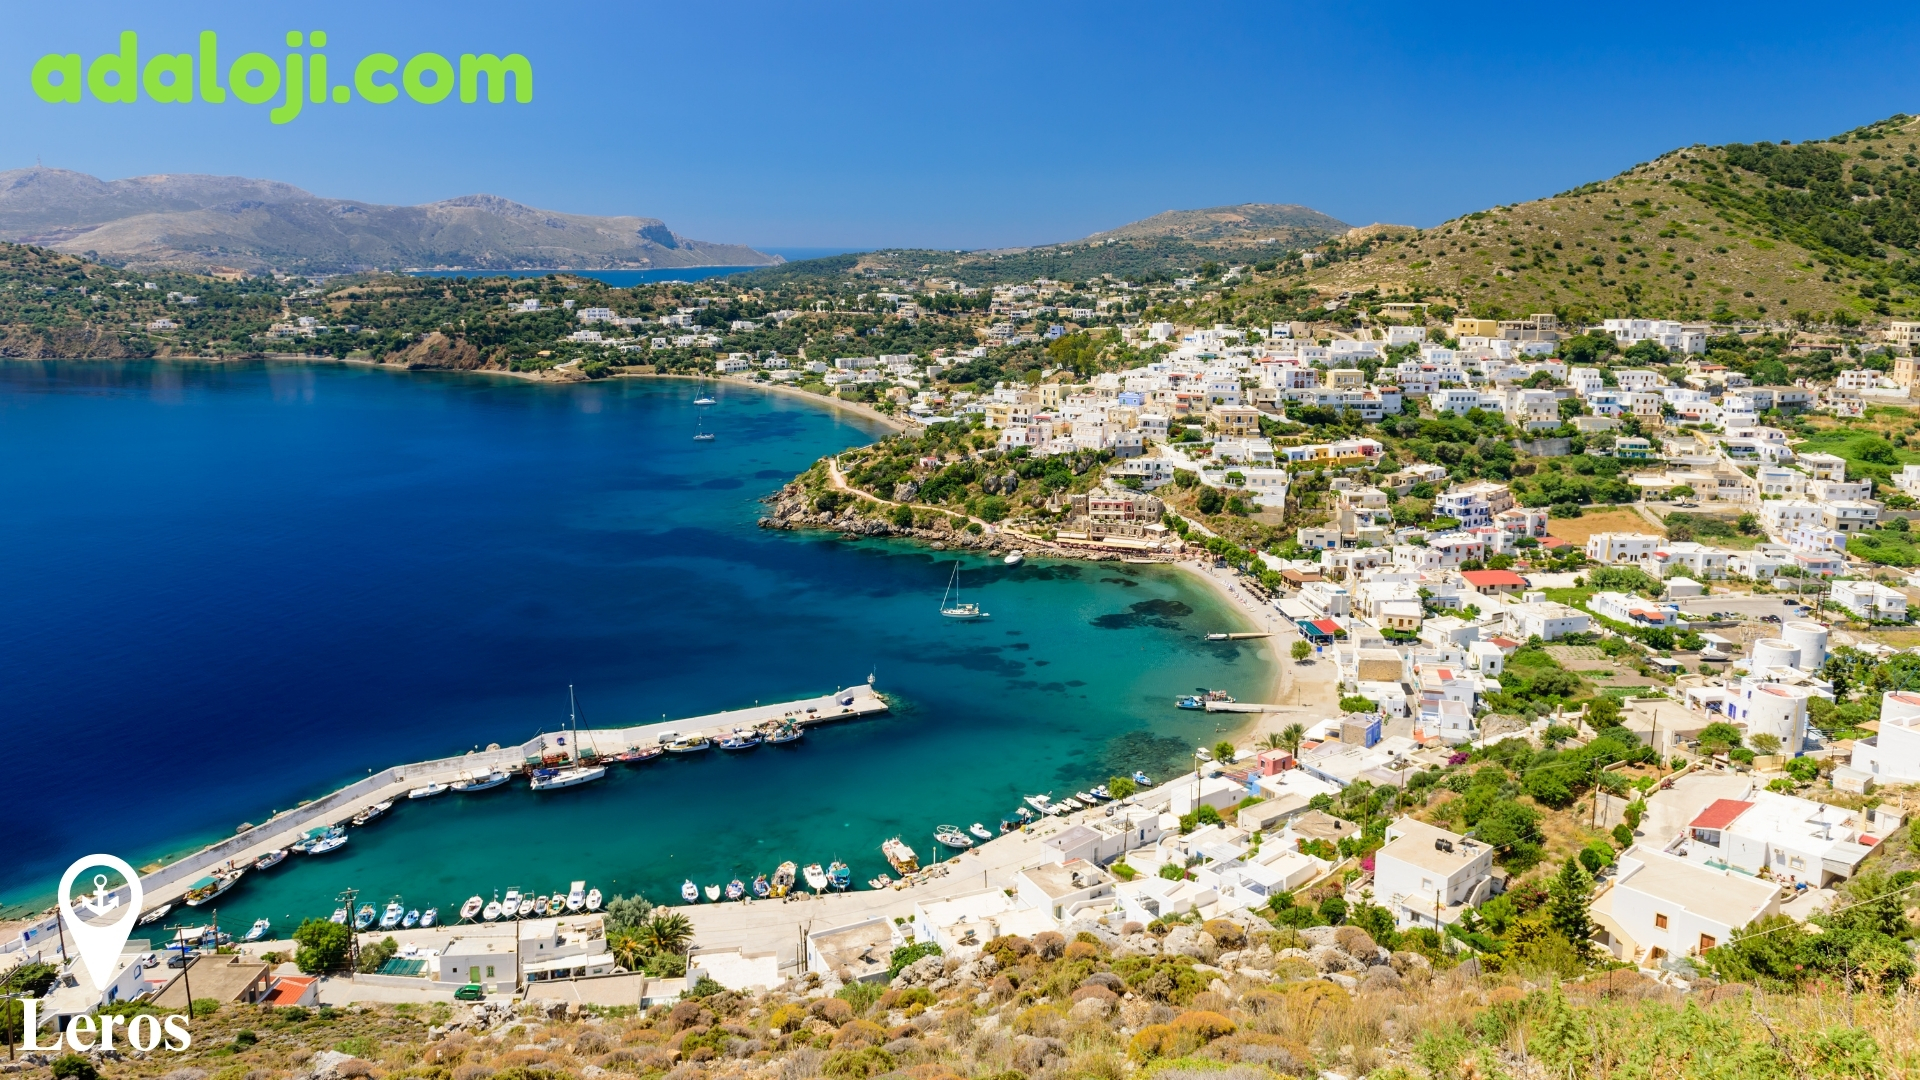 Leros - Your Gateway to the Aegean Sea.